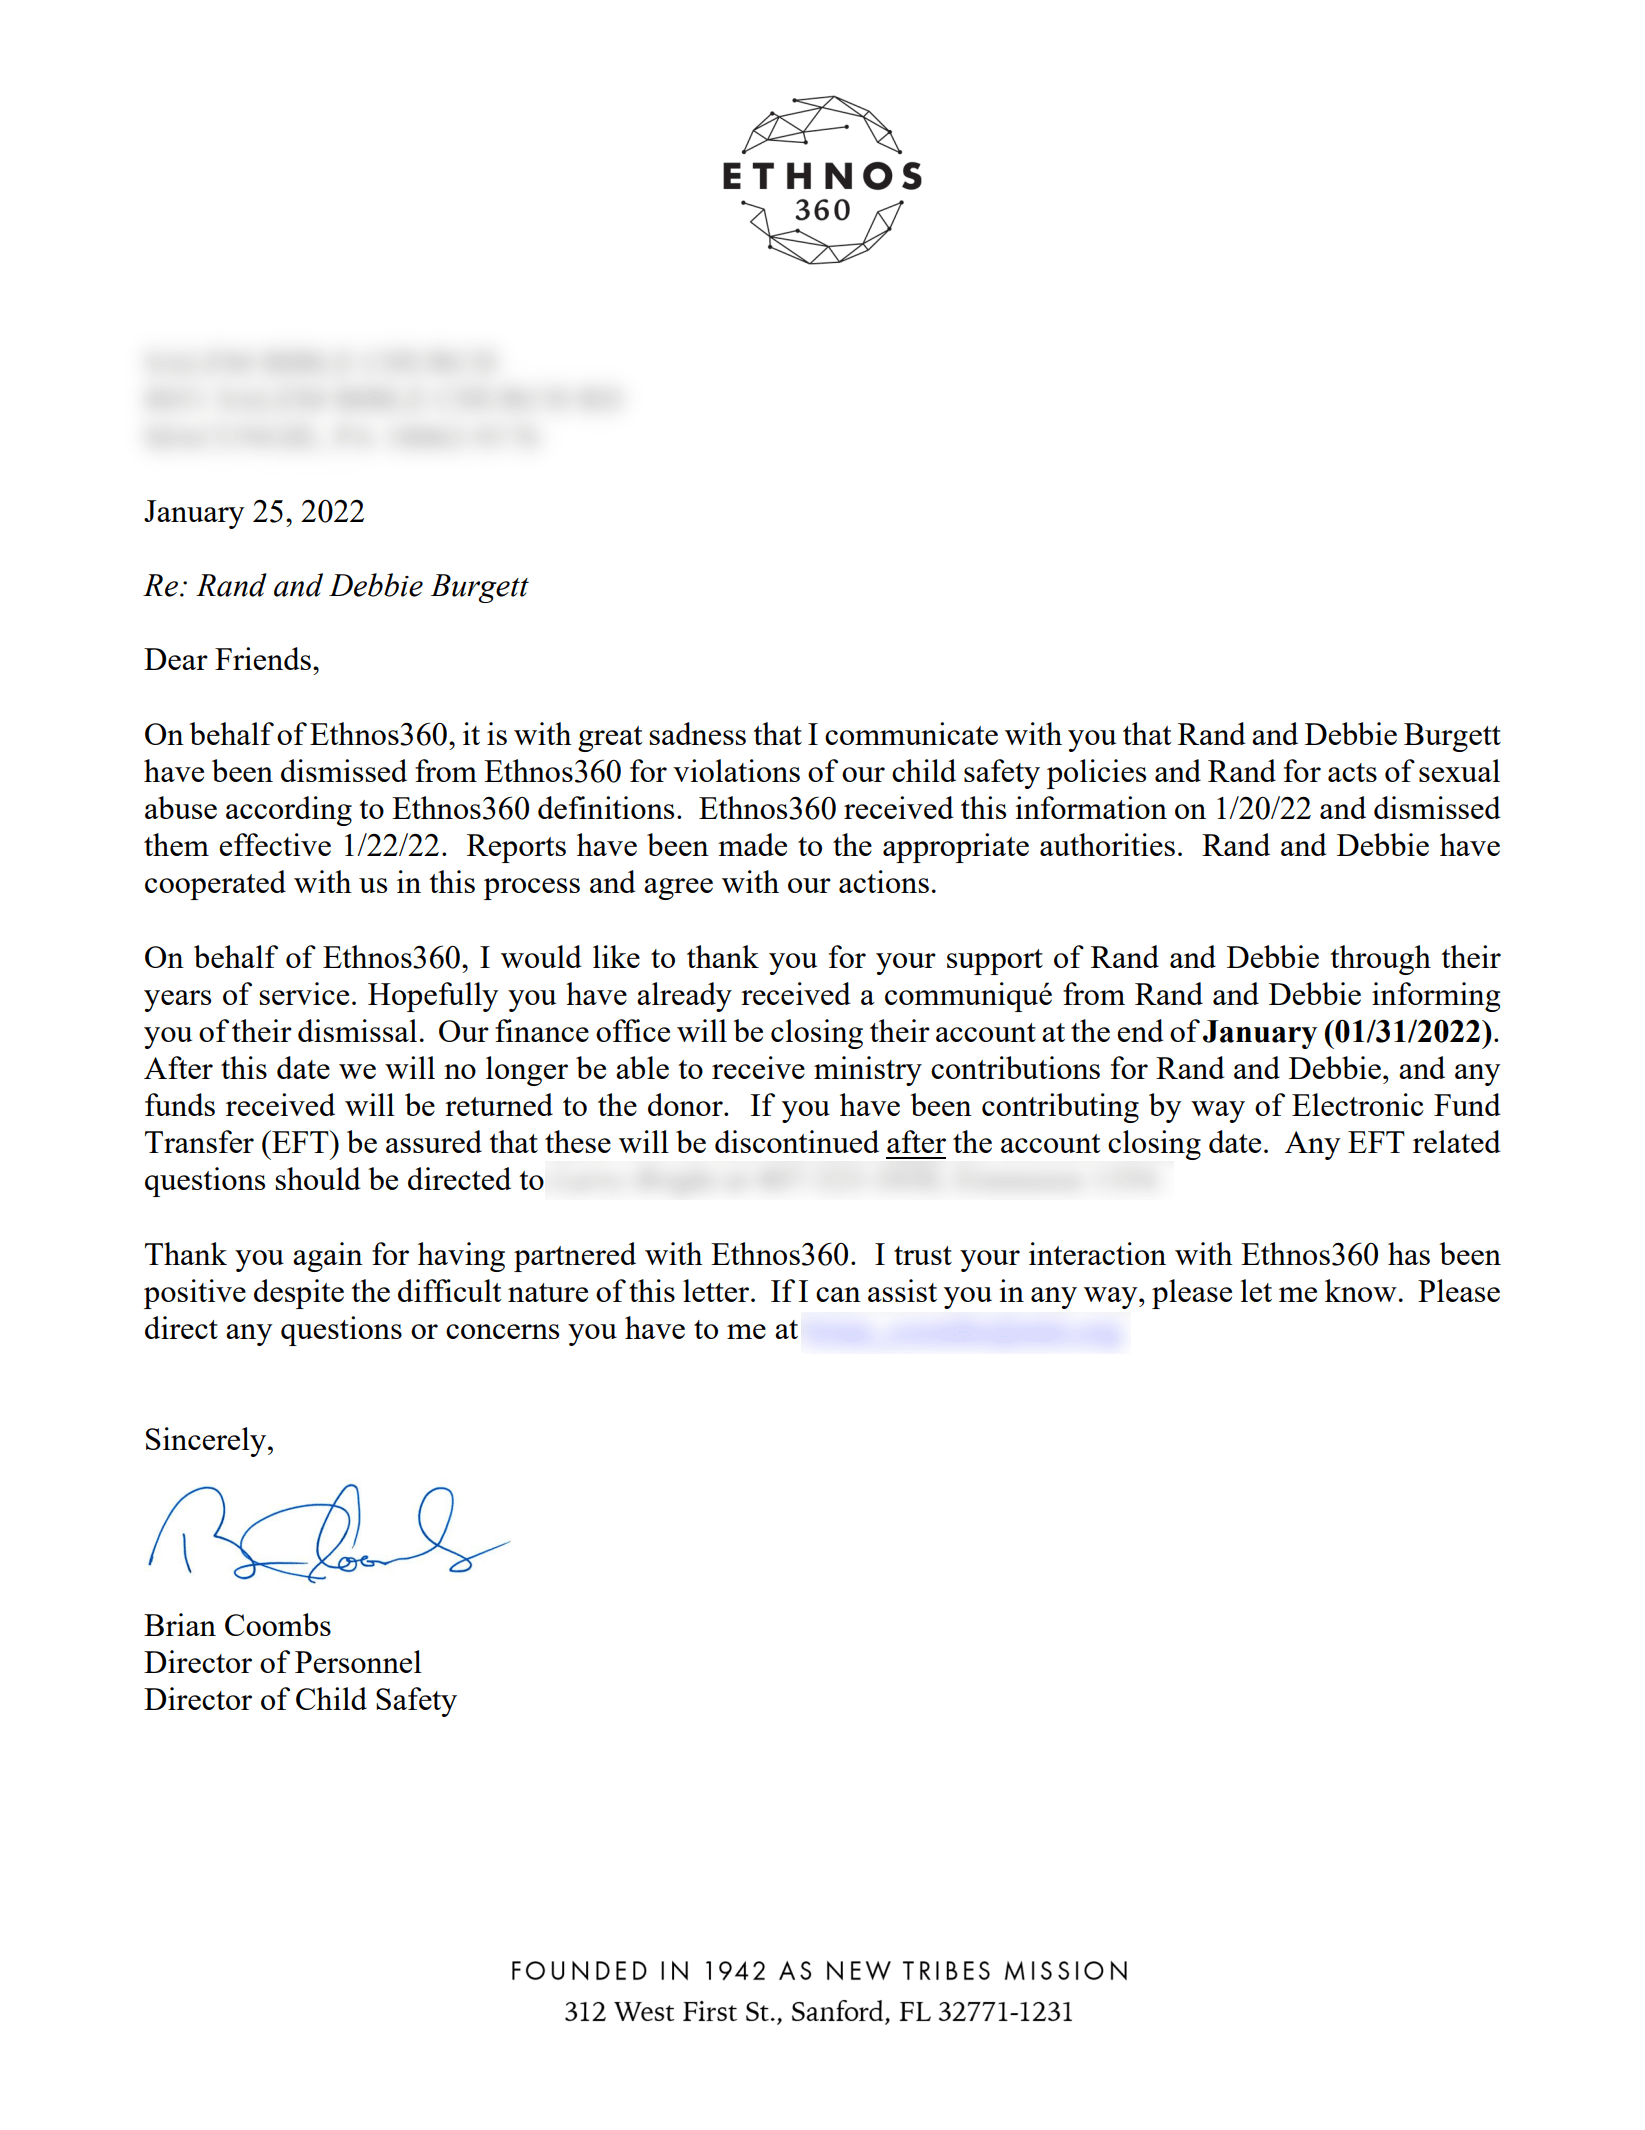 Ethnos360 letter to supporters regarding Rand Burgett and Debbie Burgett